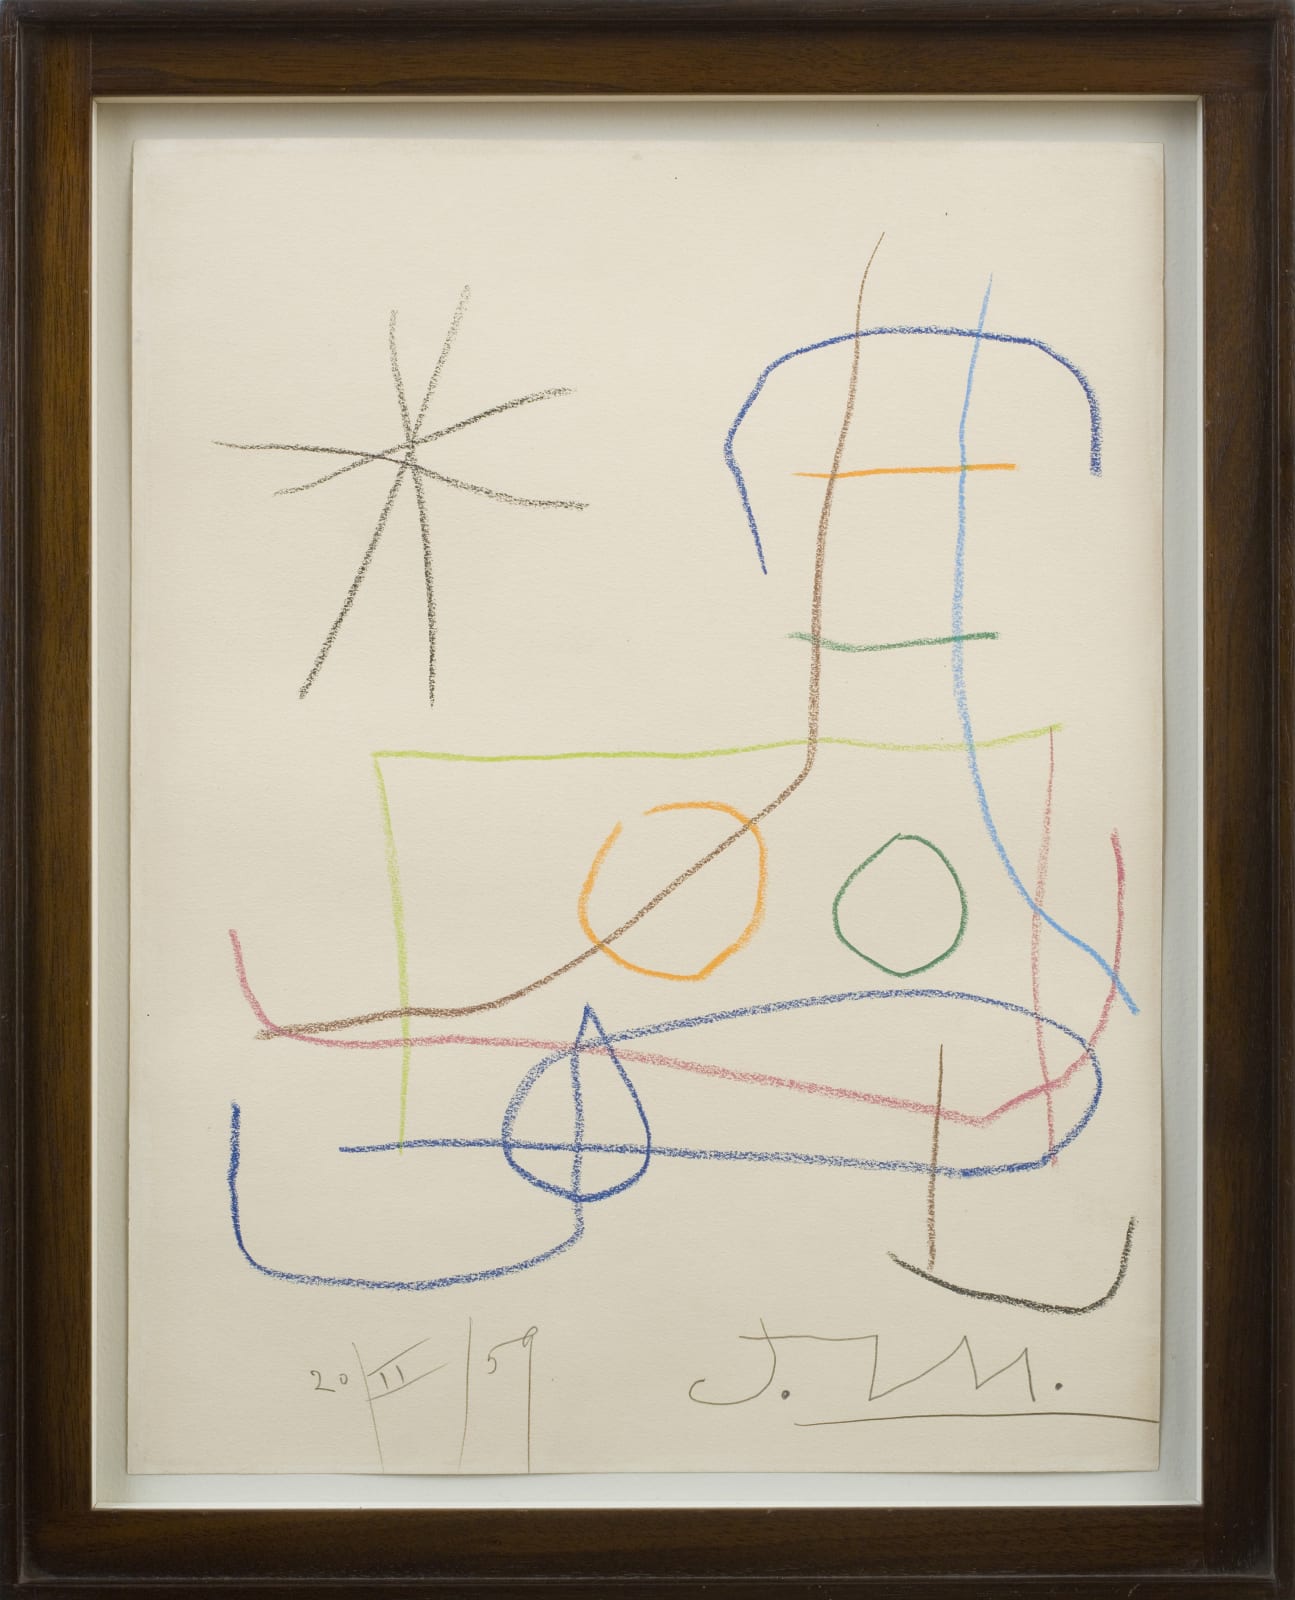 Joan Miró, Untitled, 1959